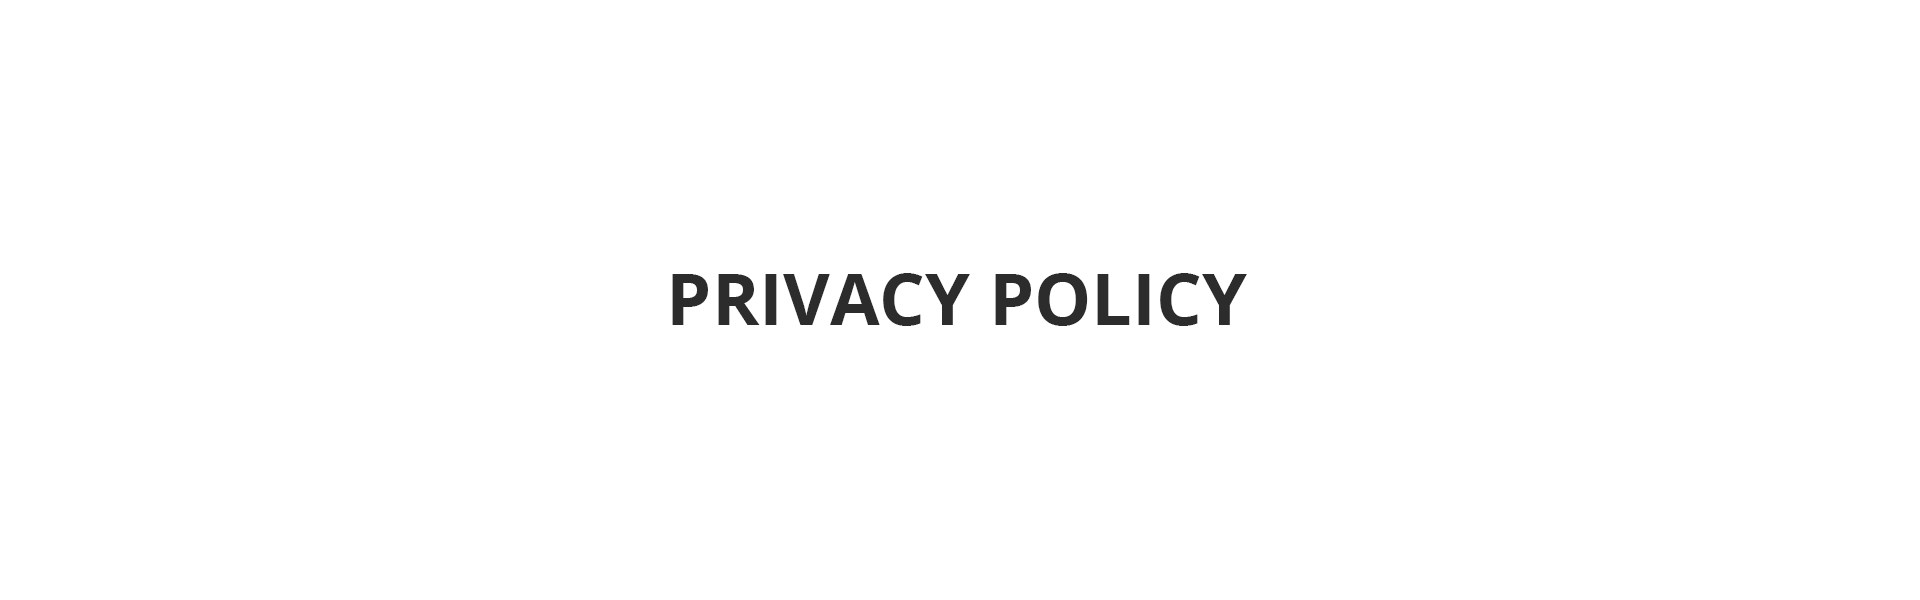 Privacy Policy of Gremsy.com